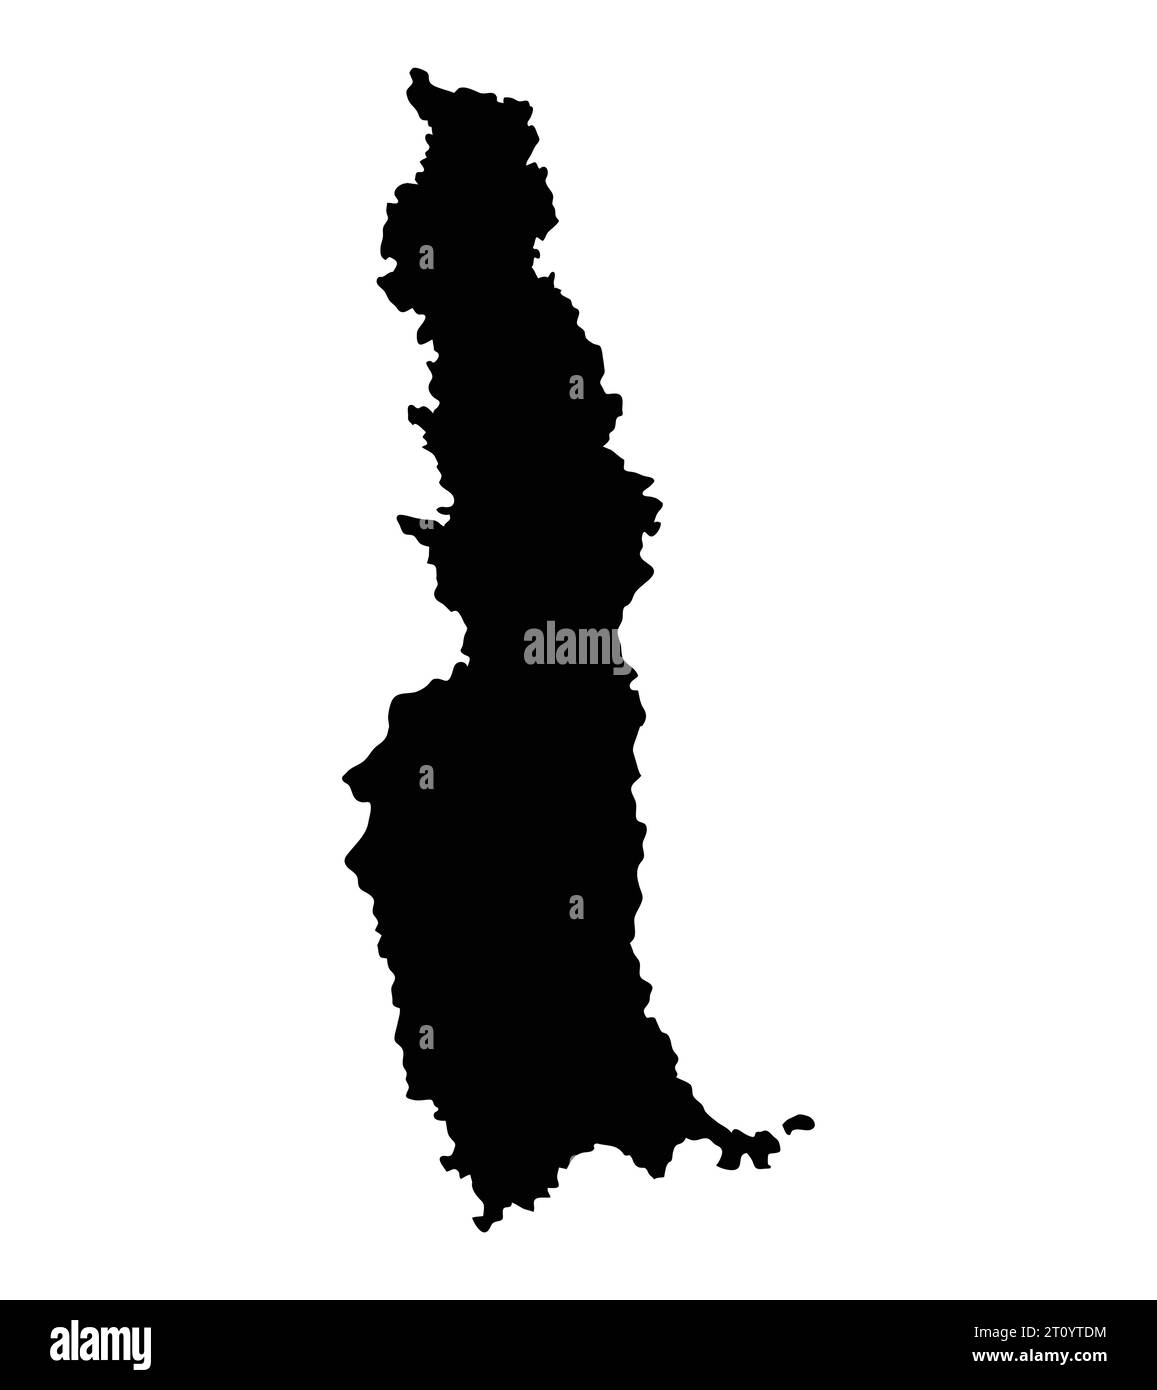 Lundy Island Landkarte Silhouette Region Territory, schwarze Form Stil Illustration Stock Vektor